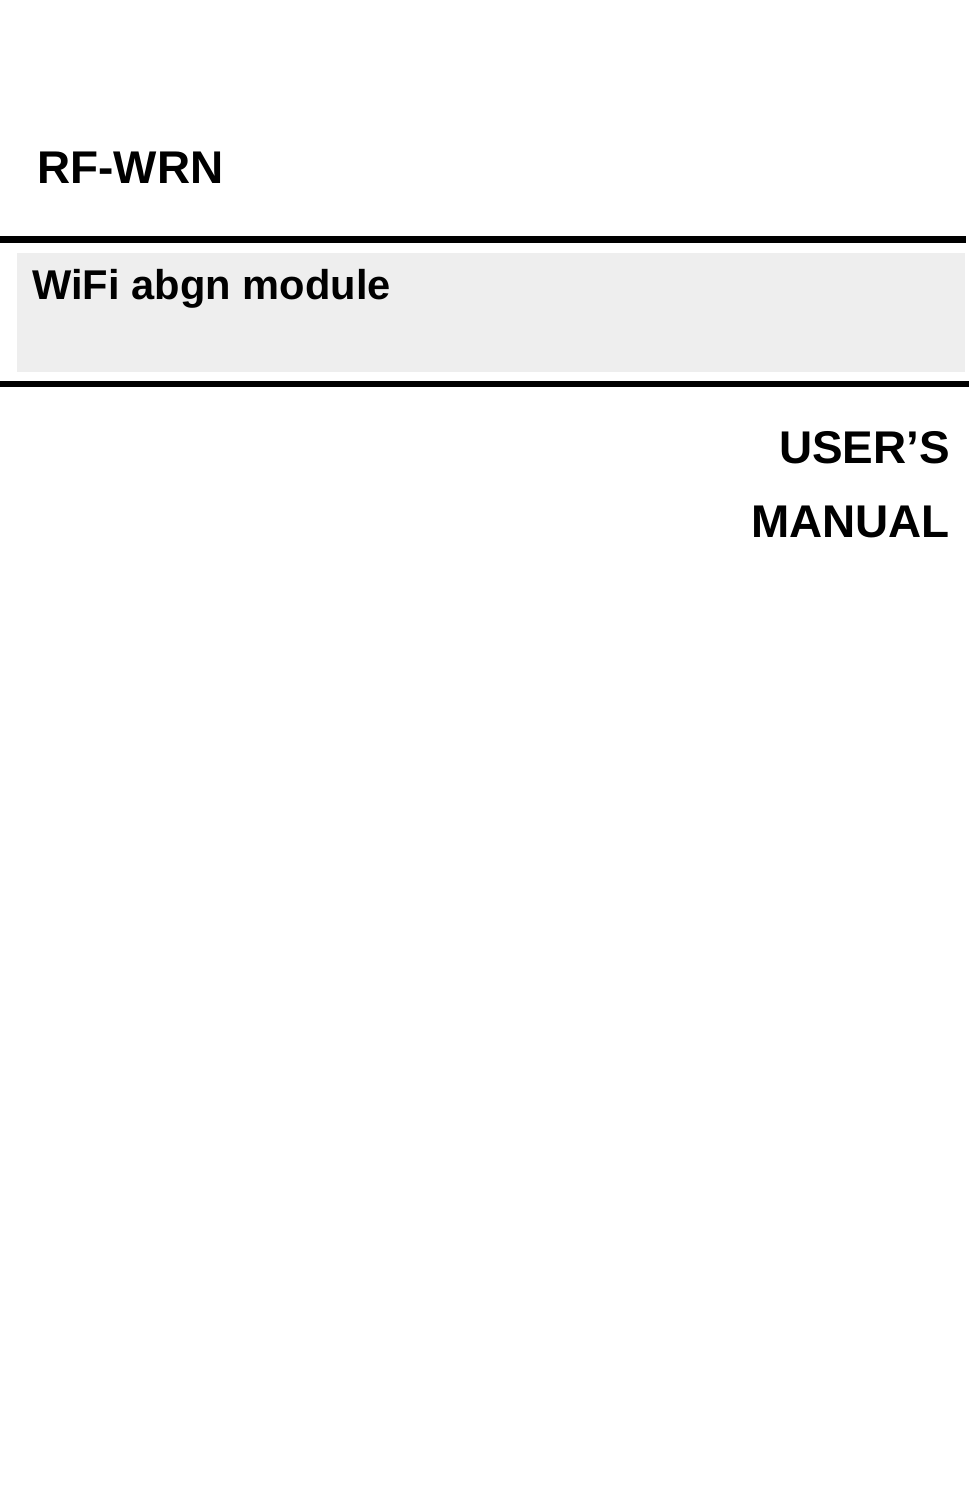                            USER’S    MANUALRF-WRN  WiFi abgn module 